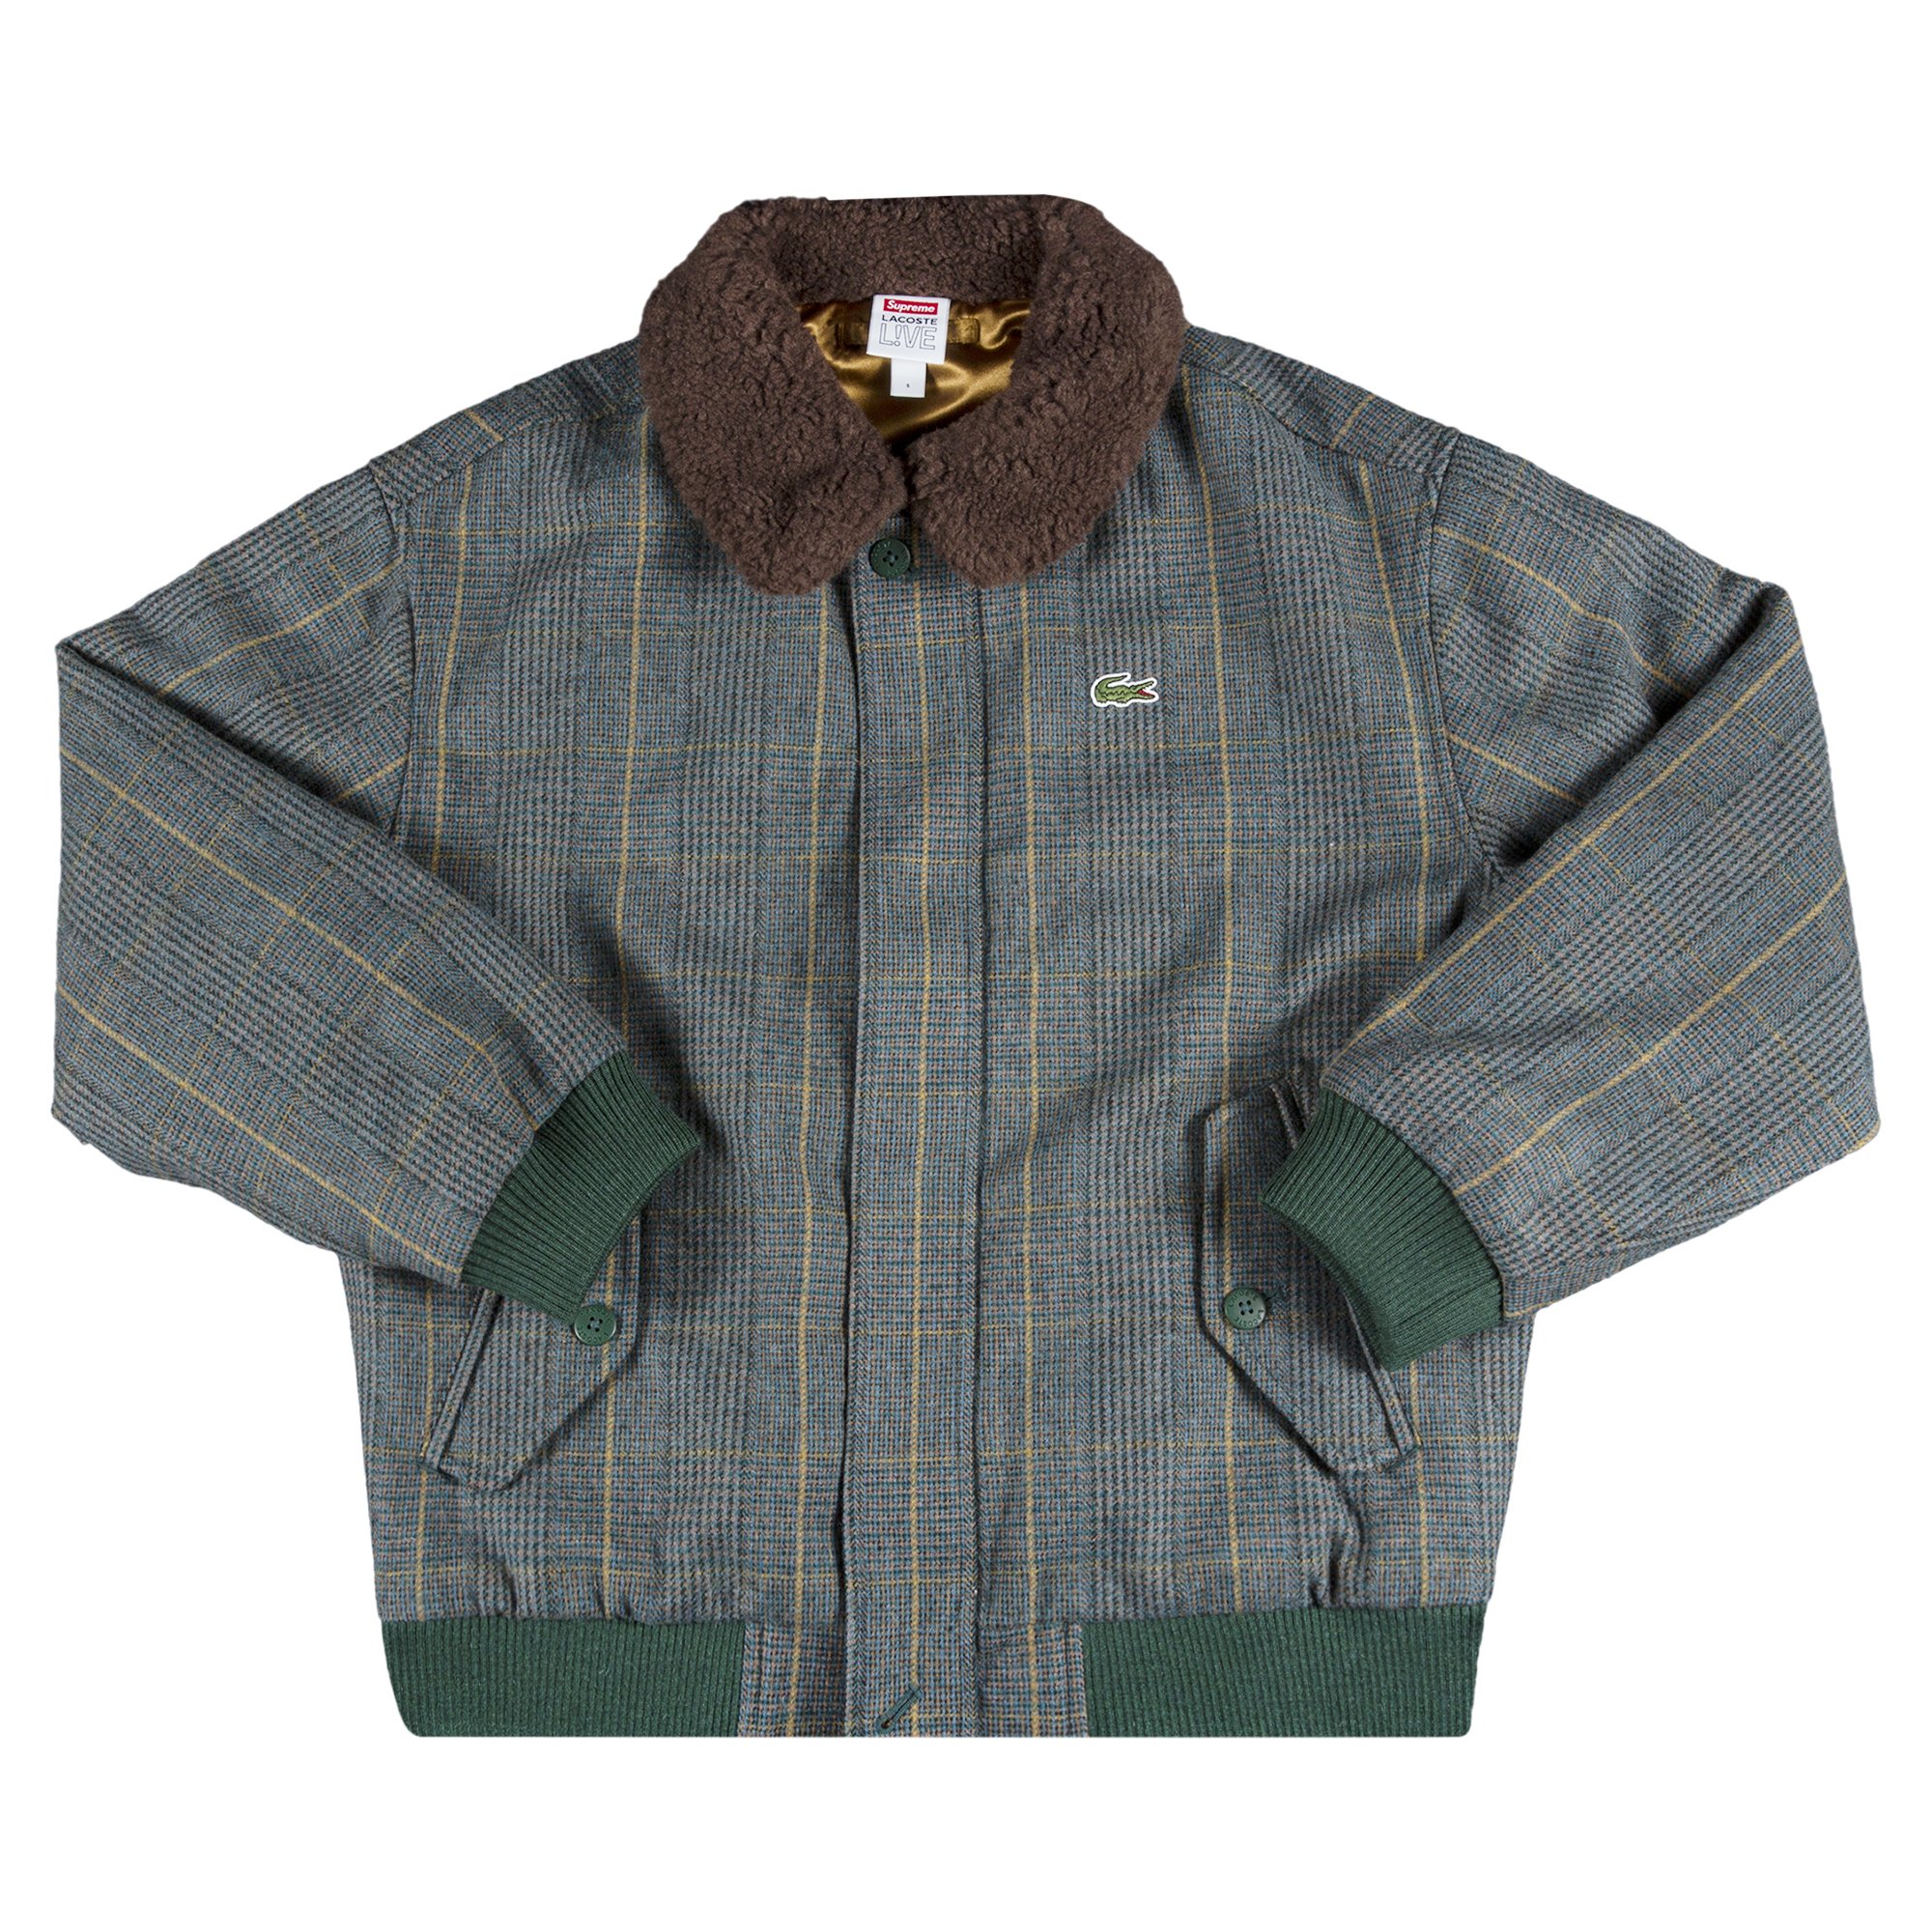 Buy Supreme x Lacoste Wool Bomber Jacket 'Green' - FW19J5 GREEN | GOAT